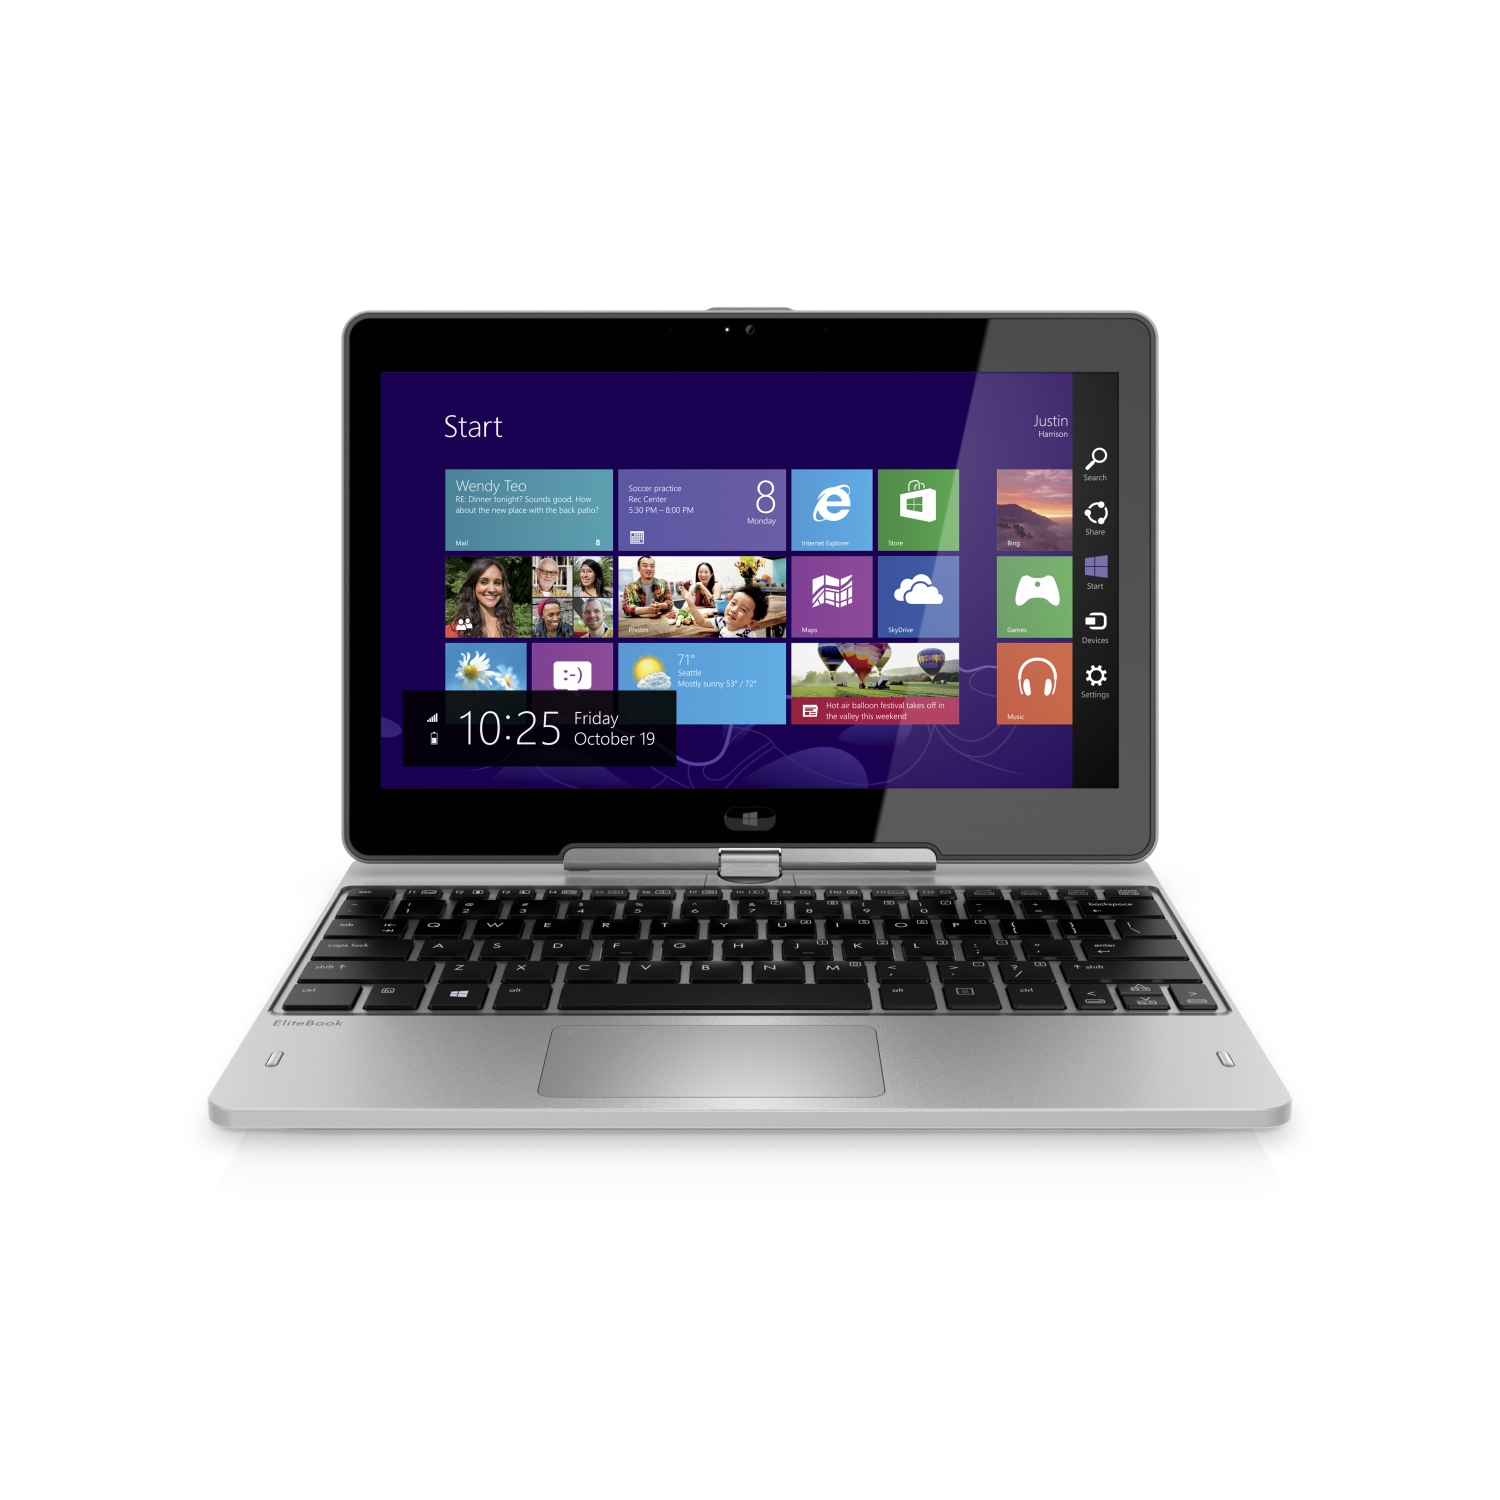 Refurbished (Excellent) - HP EliteBook Revolve 810 G3,11.6" Tablet PC Intel CI7-5600U 2.6G,8G,240G SSD,WIFI,W10H64,1 Year Warranty(EN/FR)